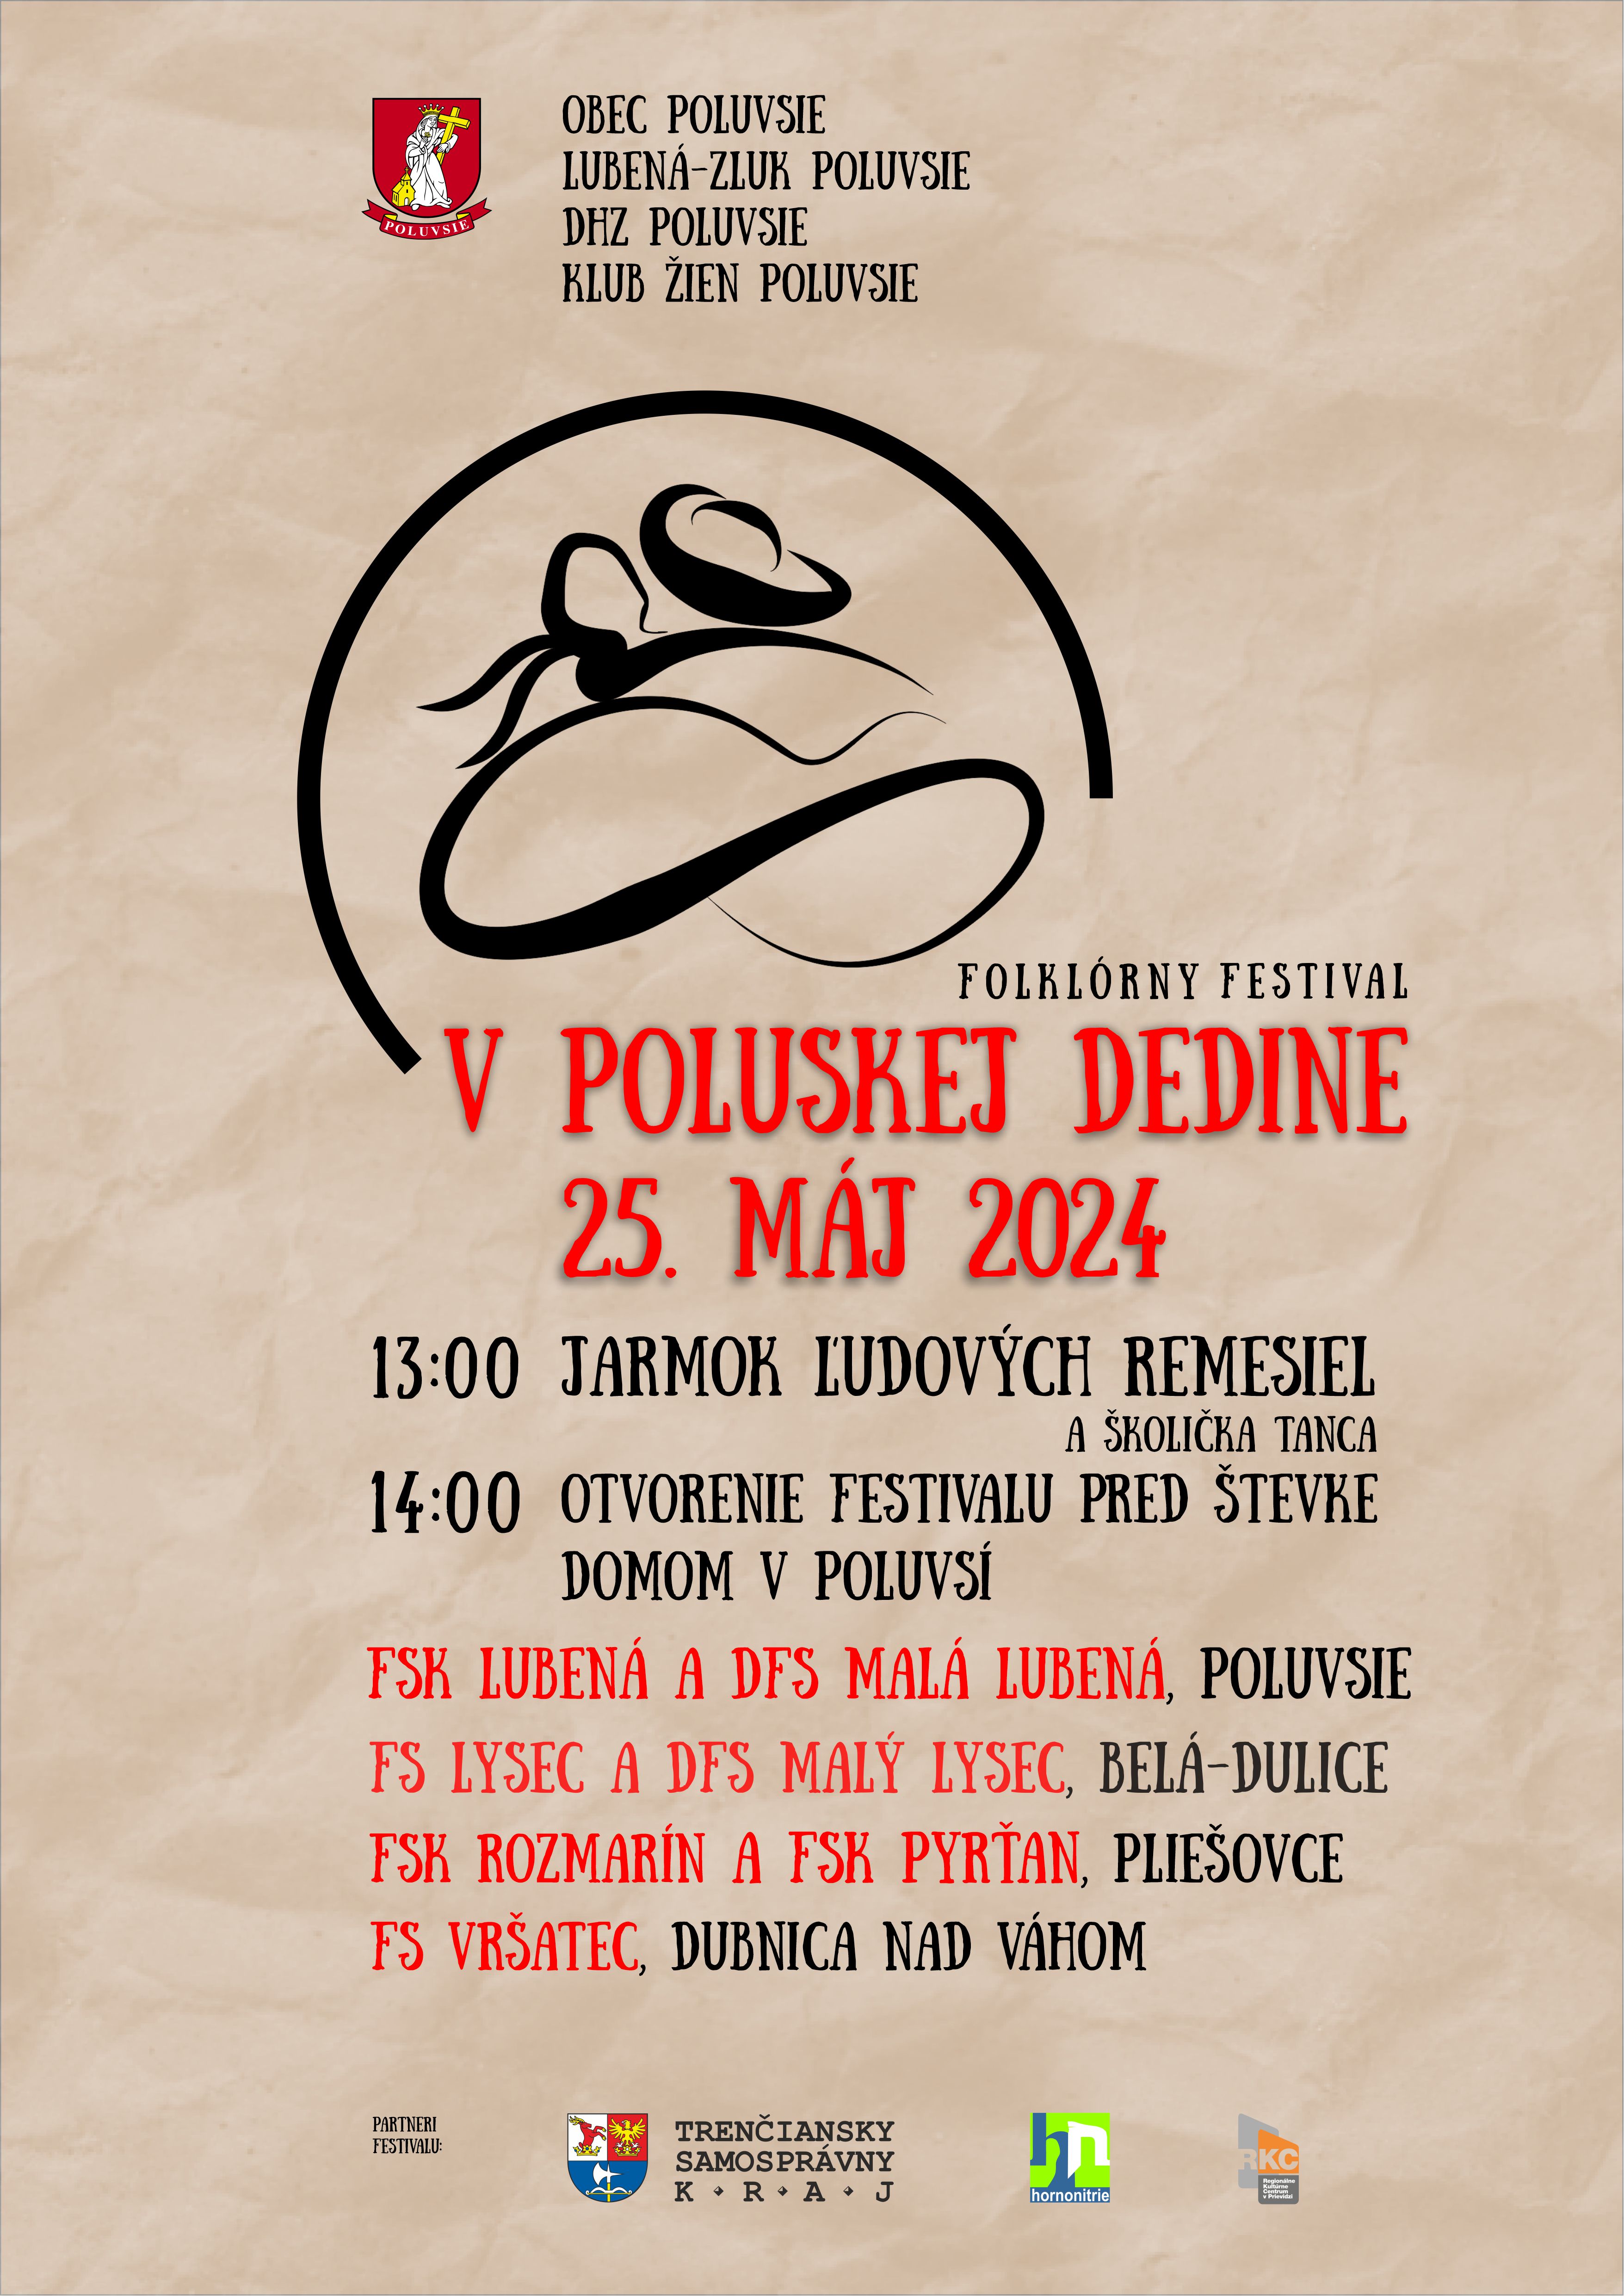 V poluskej dedine 2024 Poluvsie - 6. ronk folklrneho festivalu